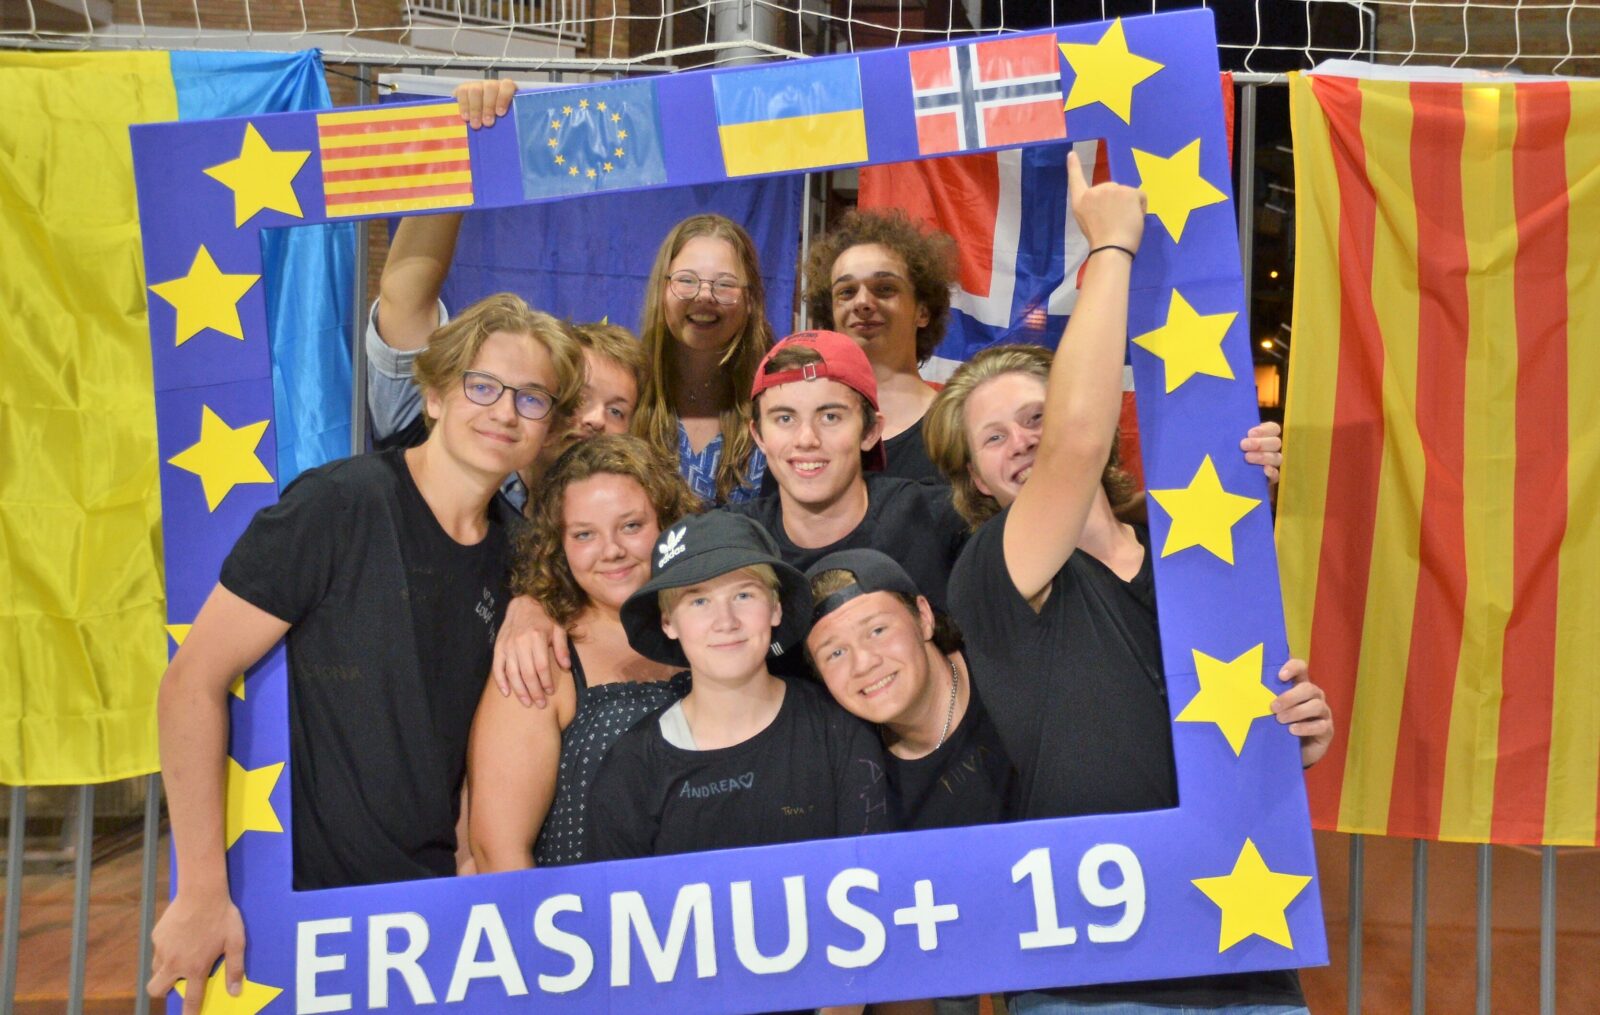 9 ungdommer poserer inni en stor blå ramme med flagg, stjerner og Erasmus+ 19.